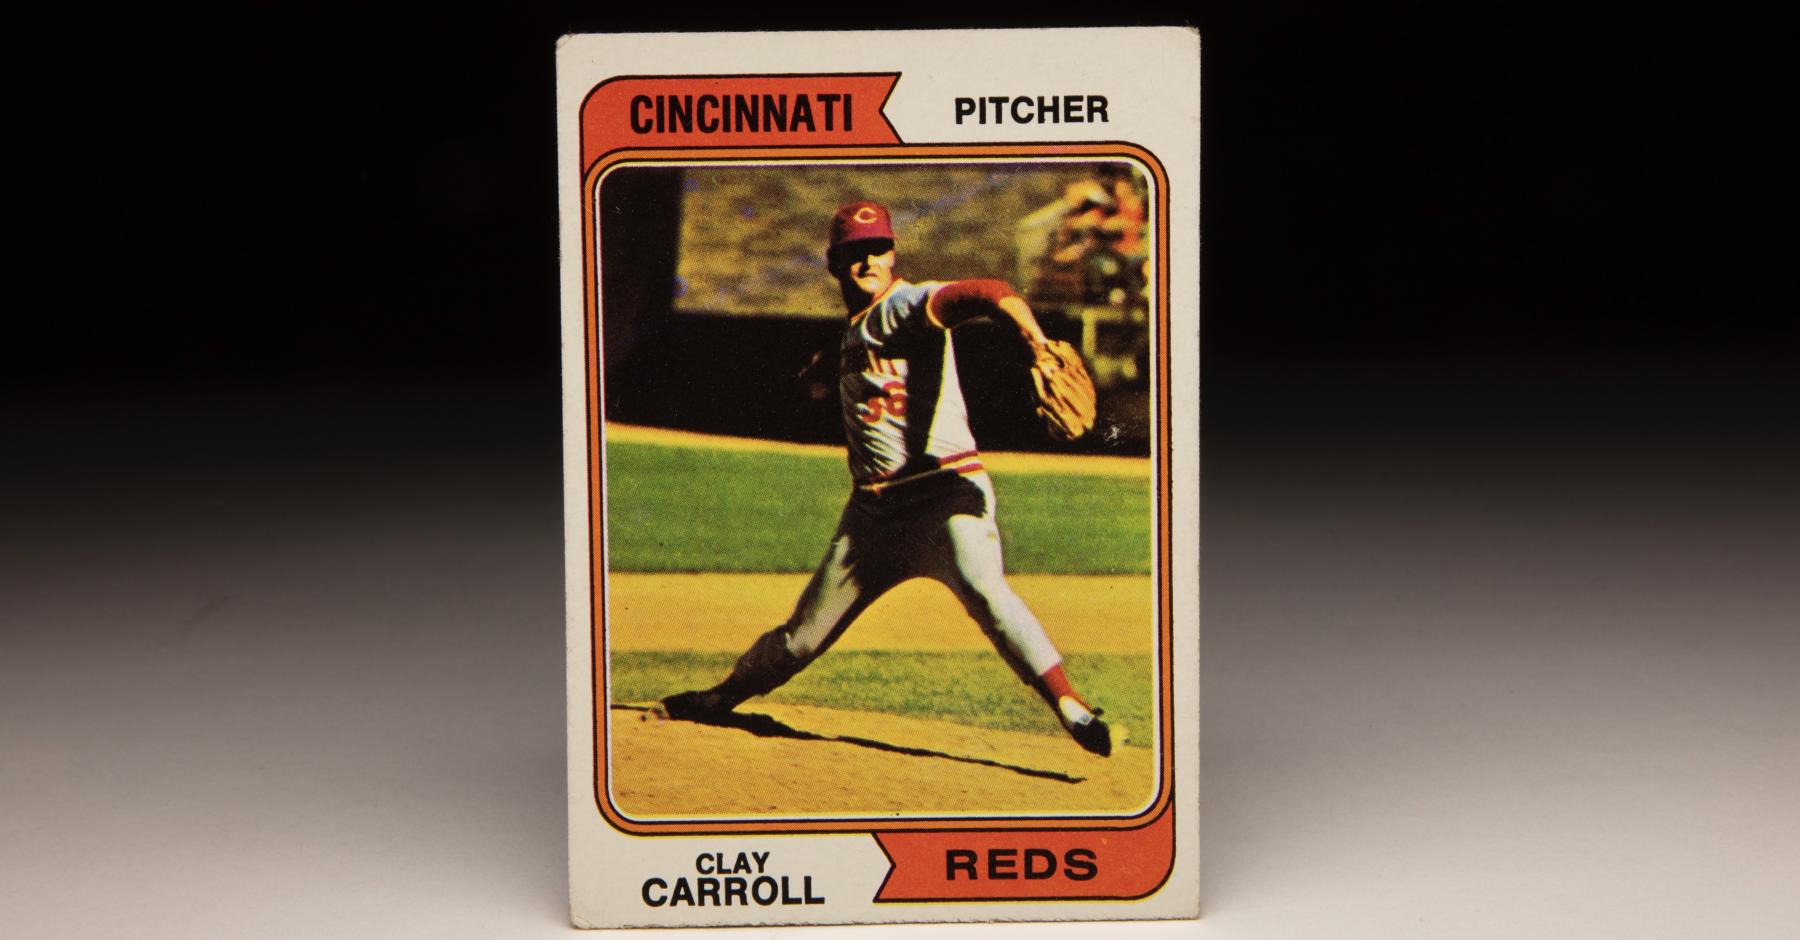 Merv Rettenmund autographed Baseball Card (Cincinnati Reds, 67